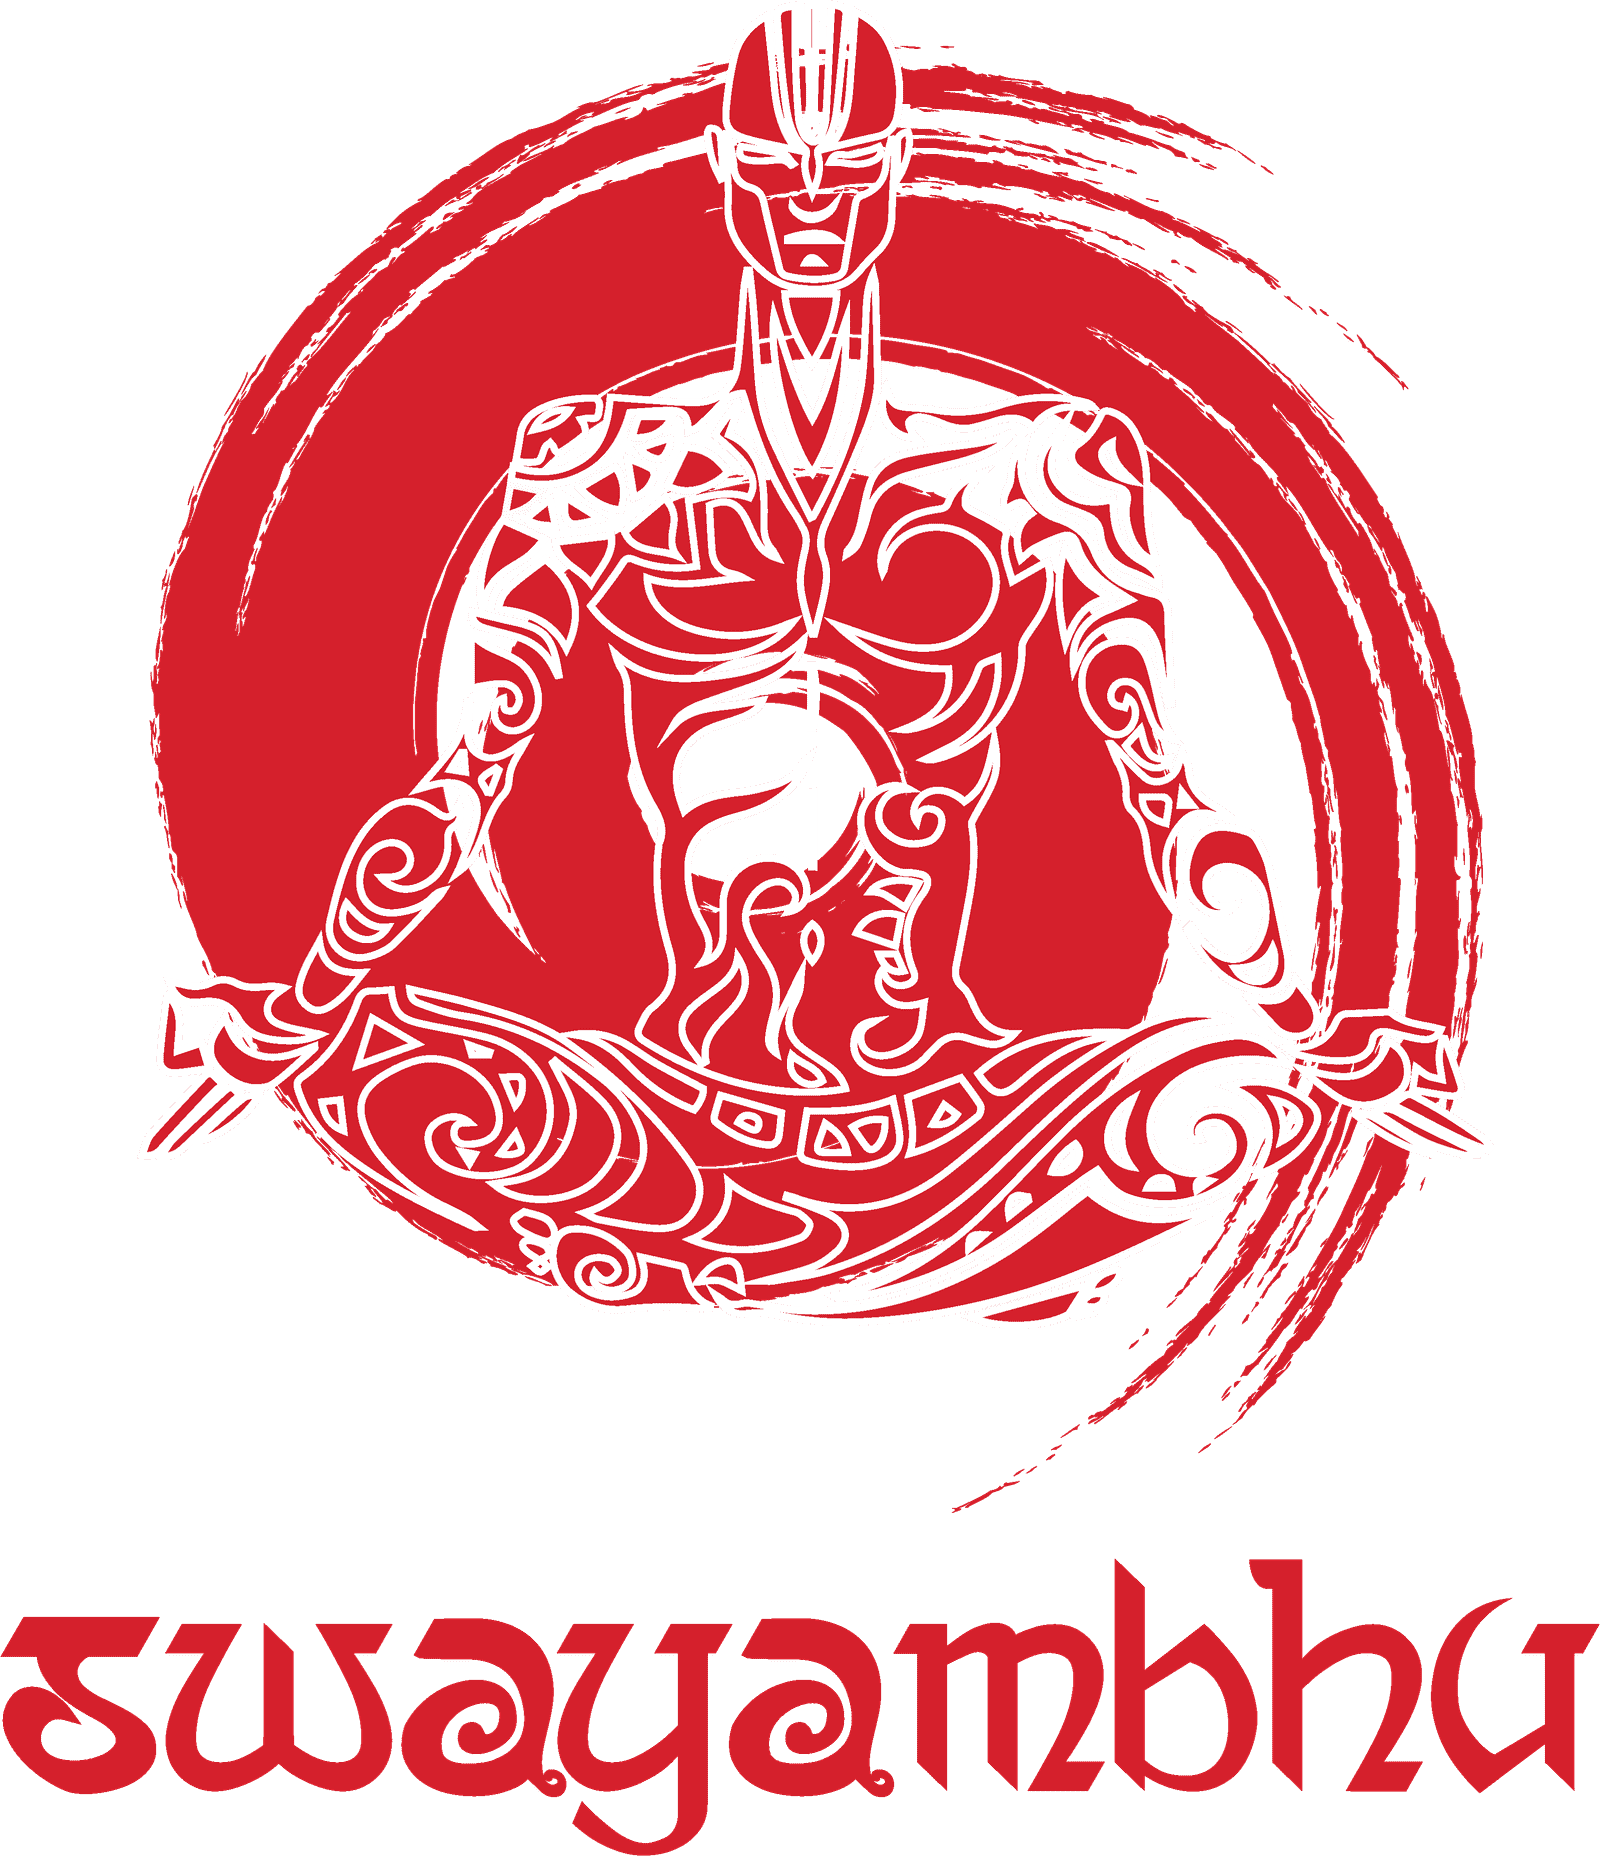 swayambhu comics logo